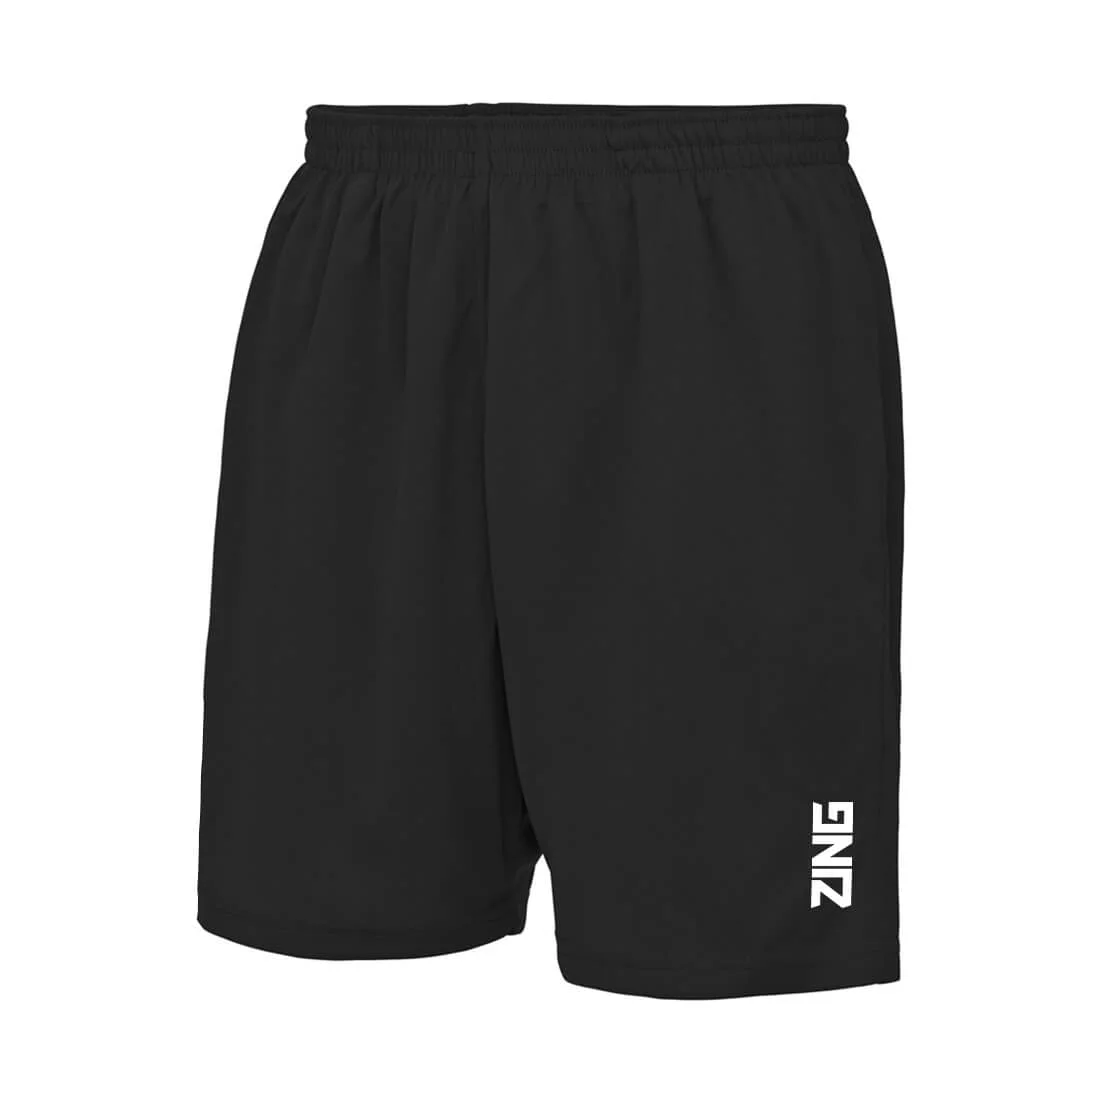 ZING Sportswear Training Shorts | Training Kit and Teamwear - Black